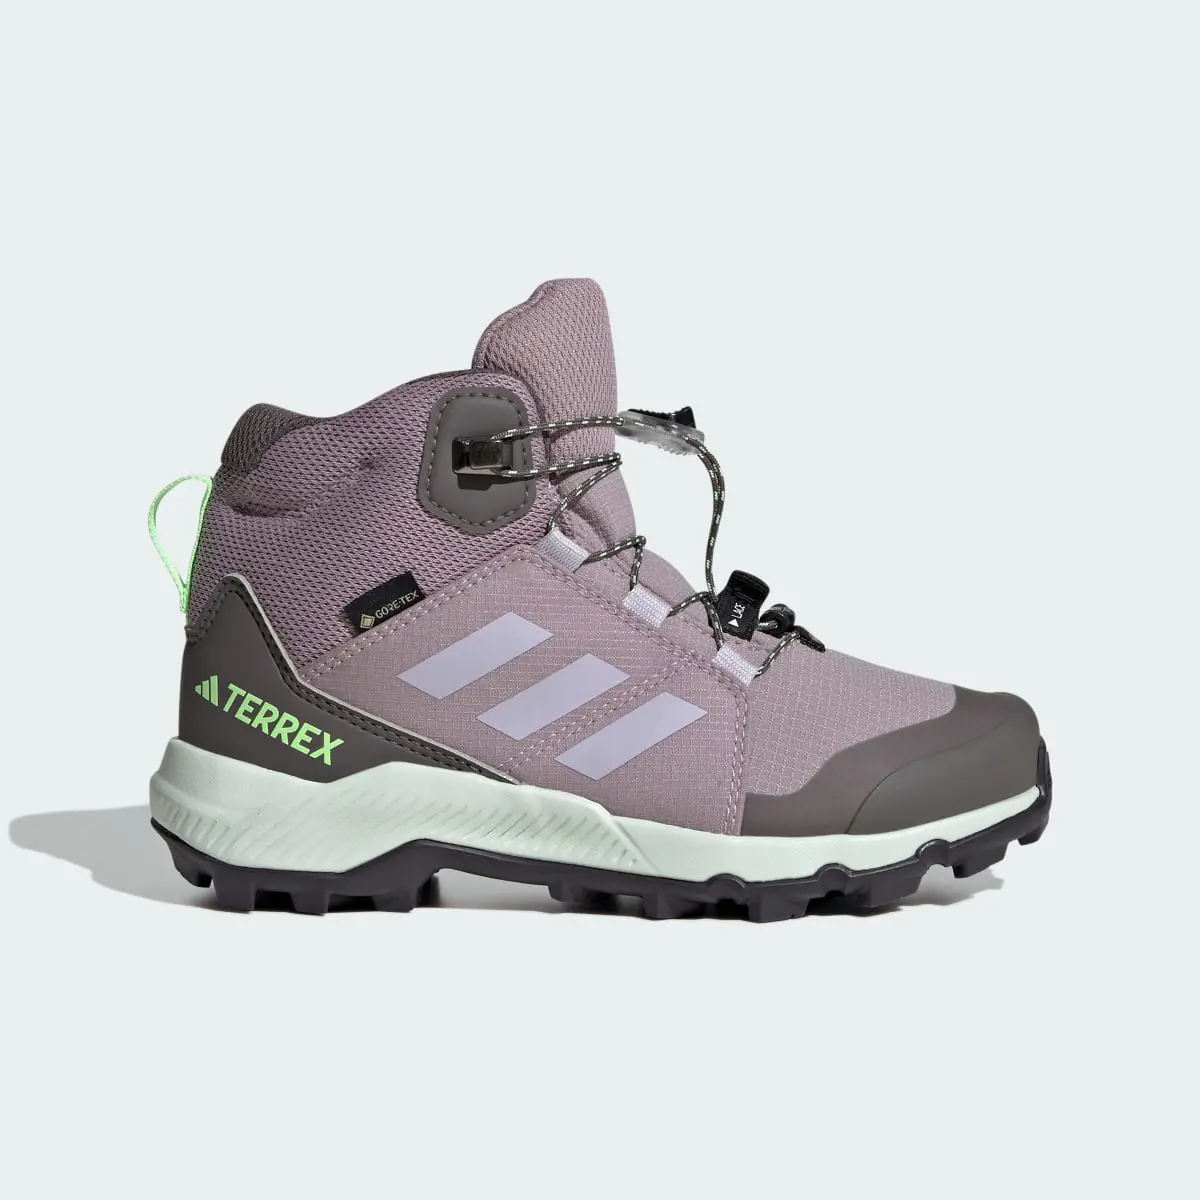 Adidas Terrex Mid GORE-TEX Hiking Shoes. 2